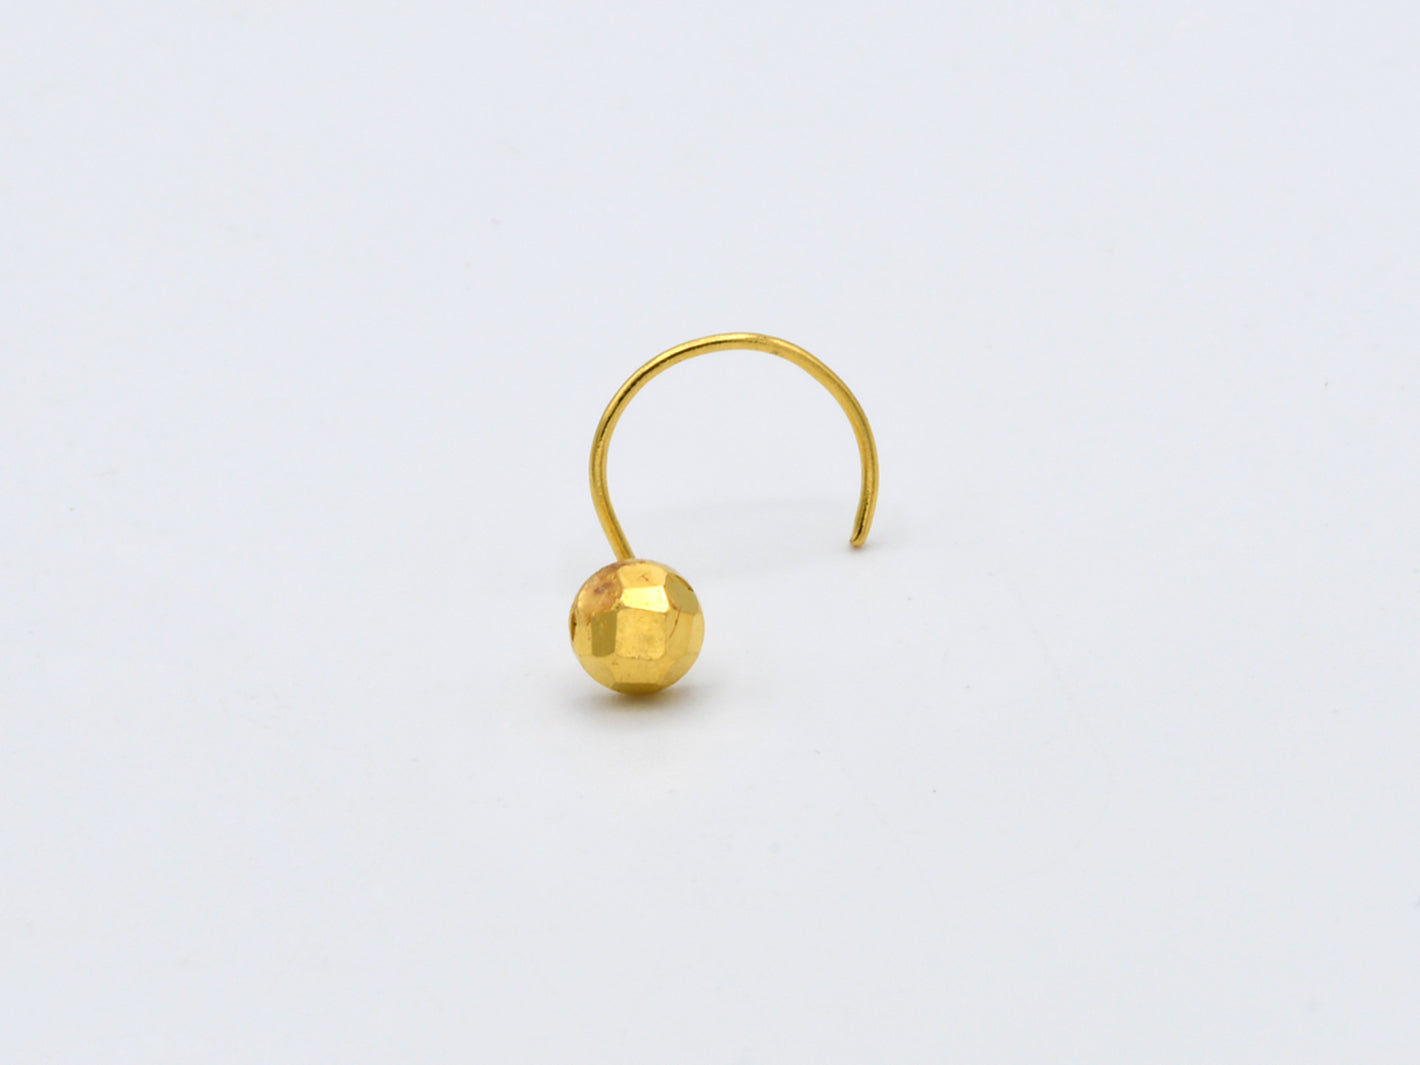 22ct Gold Nose Pin - 2.5 mm - Roop Darshan